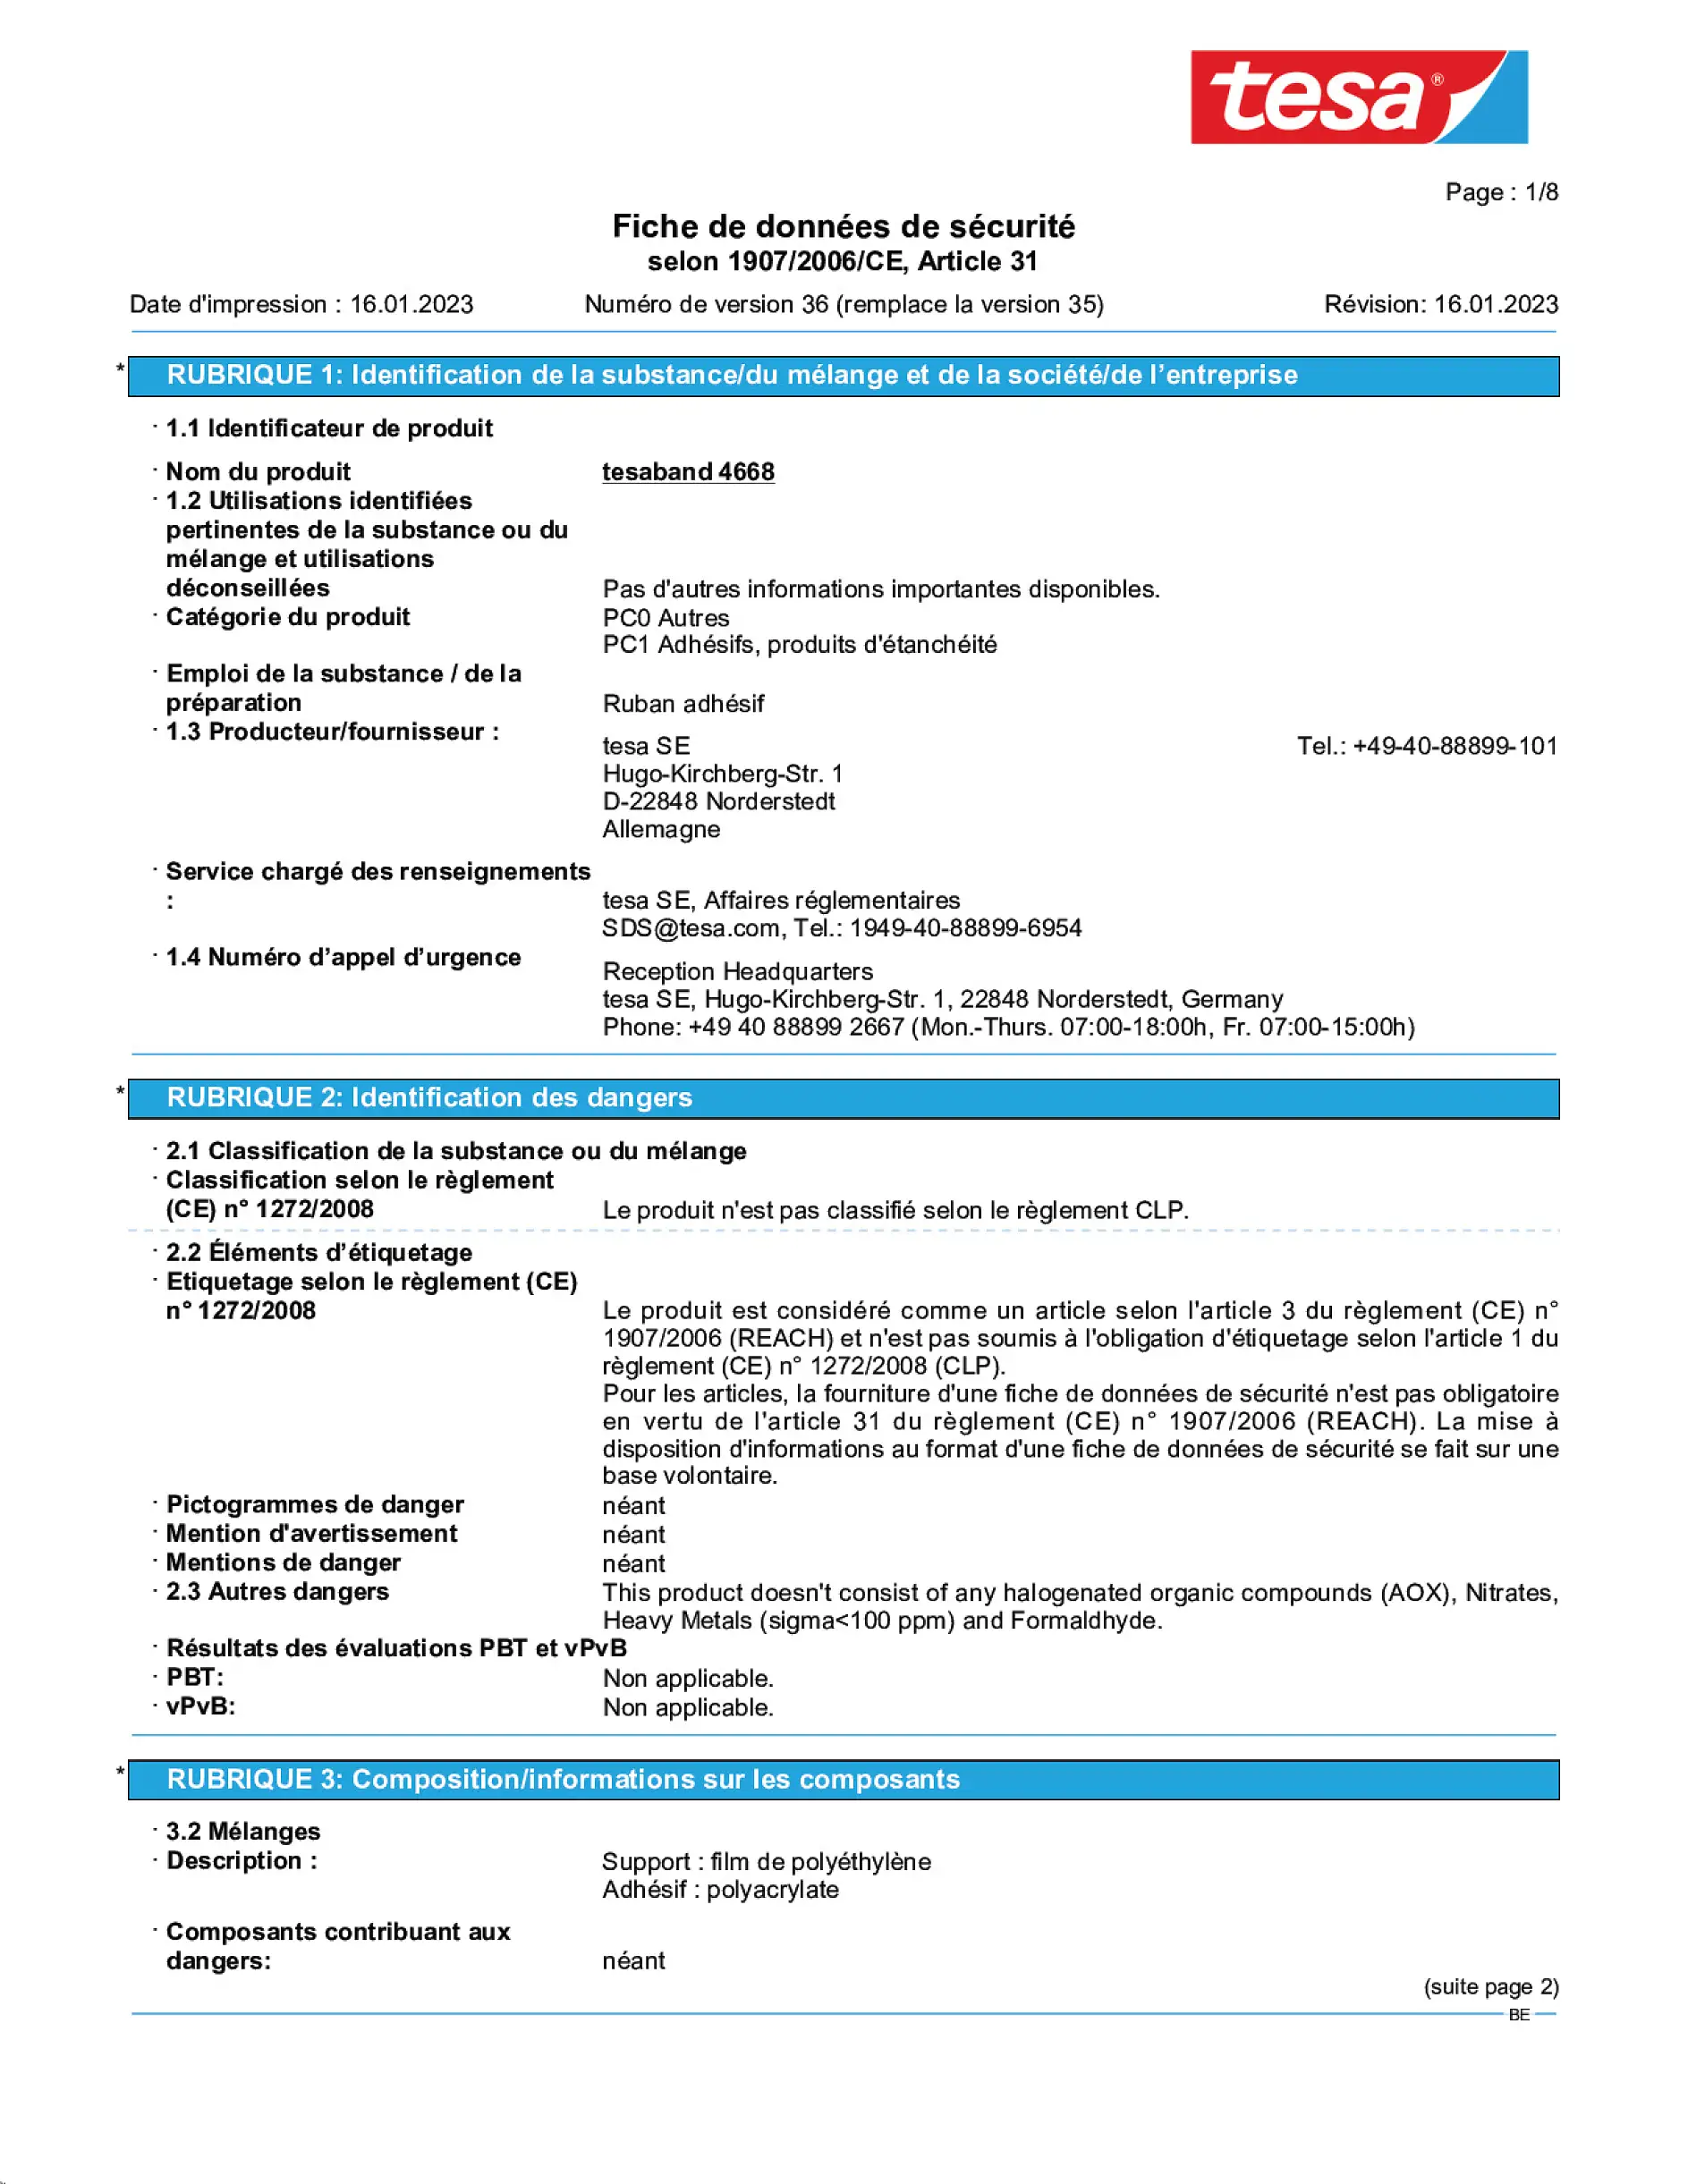 Safety data sheet_tesa® Professional 04668_nl-BE_v36